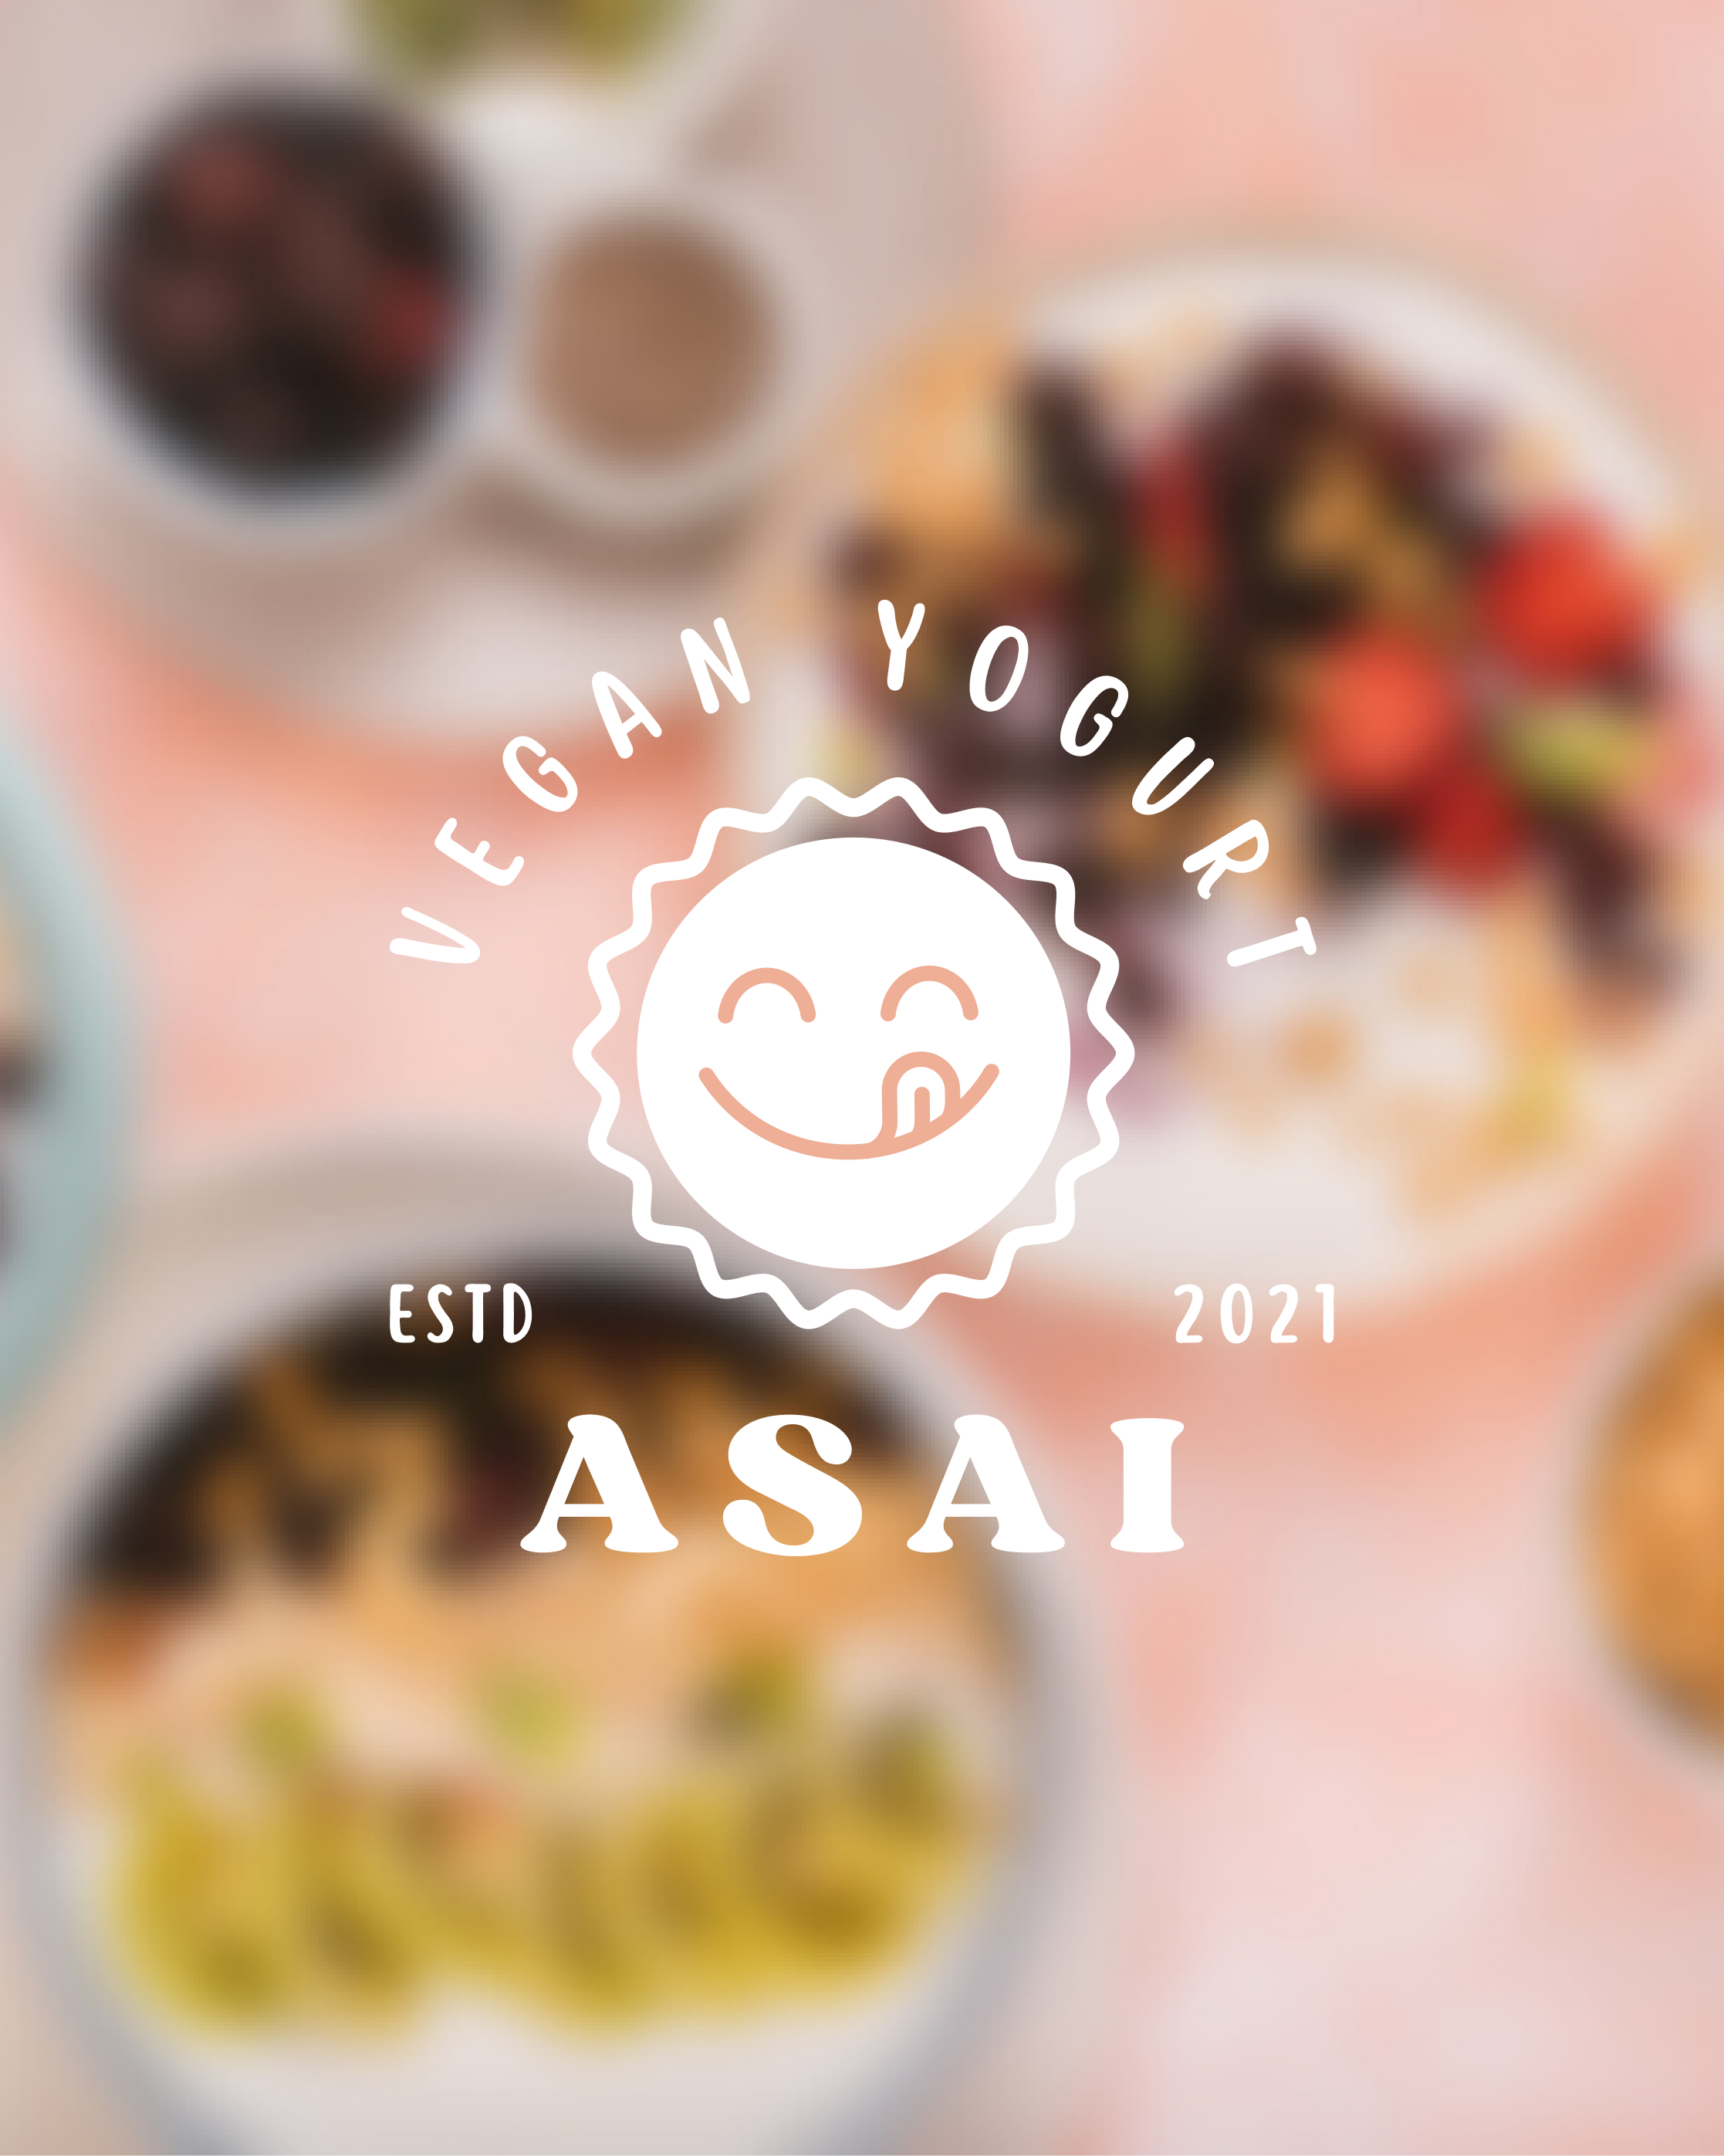 yaourt vegan logo